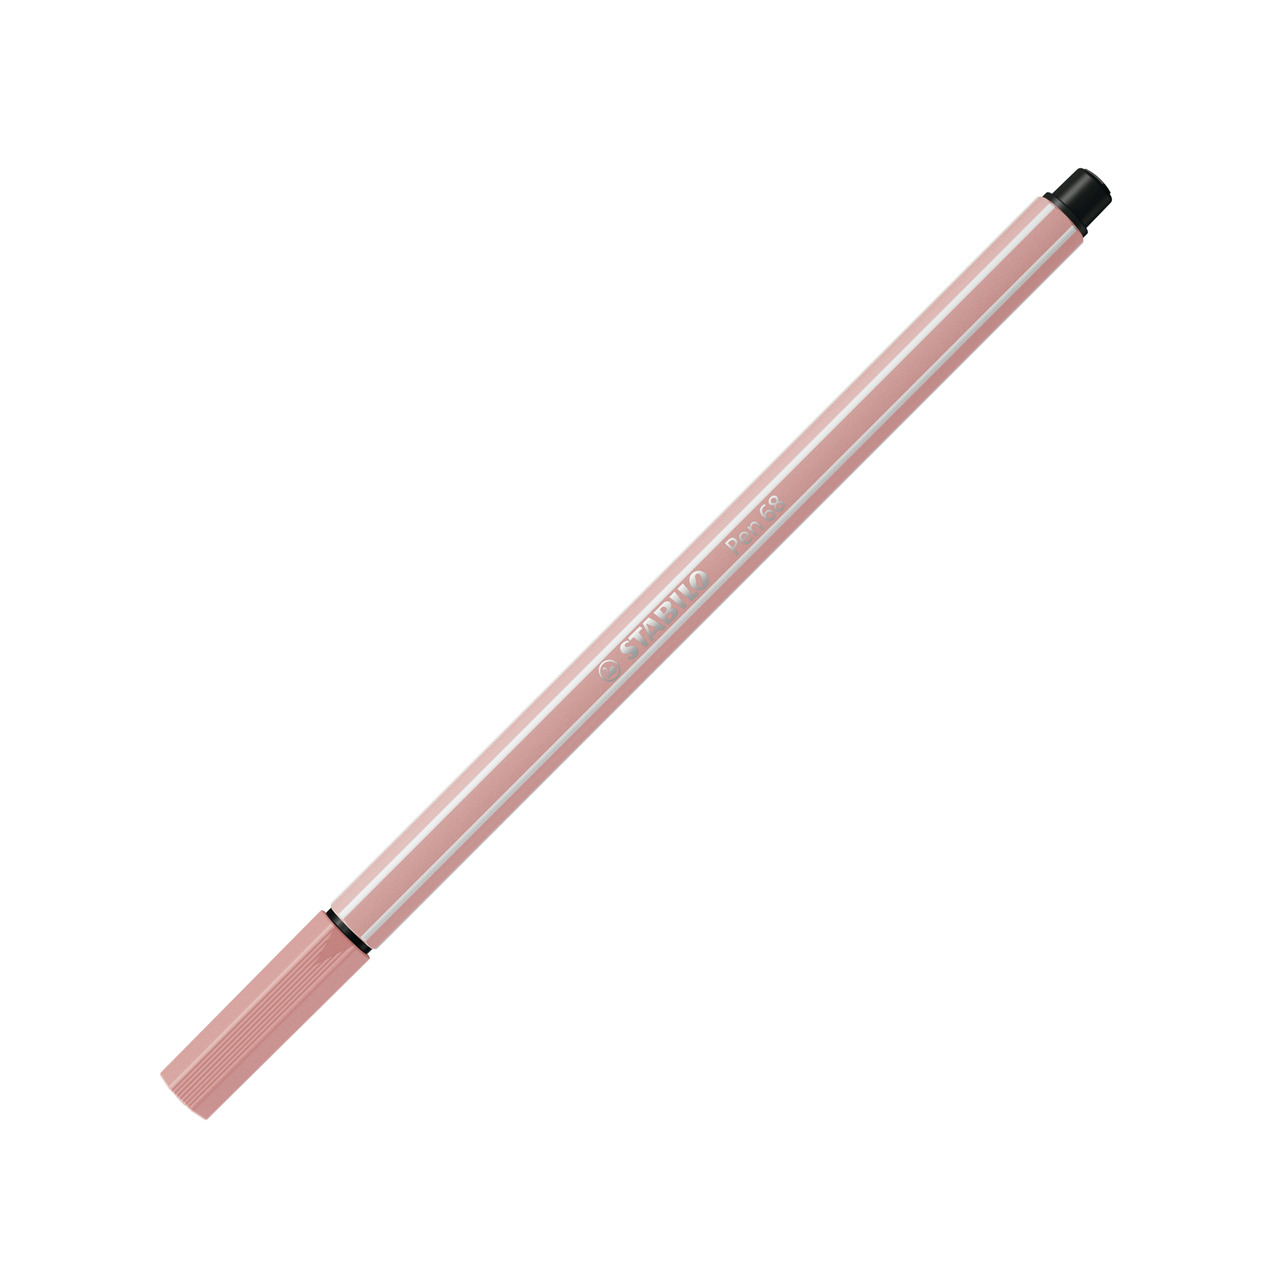 STABILO Pen 68, premium viltstift, blush, per stuk